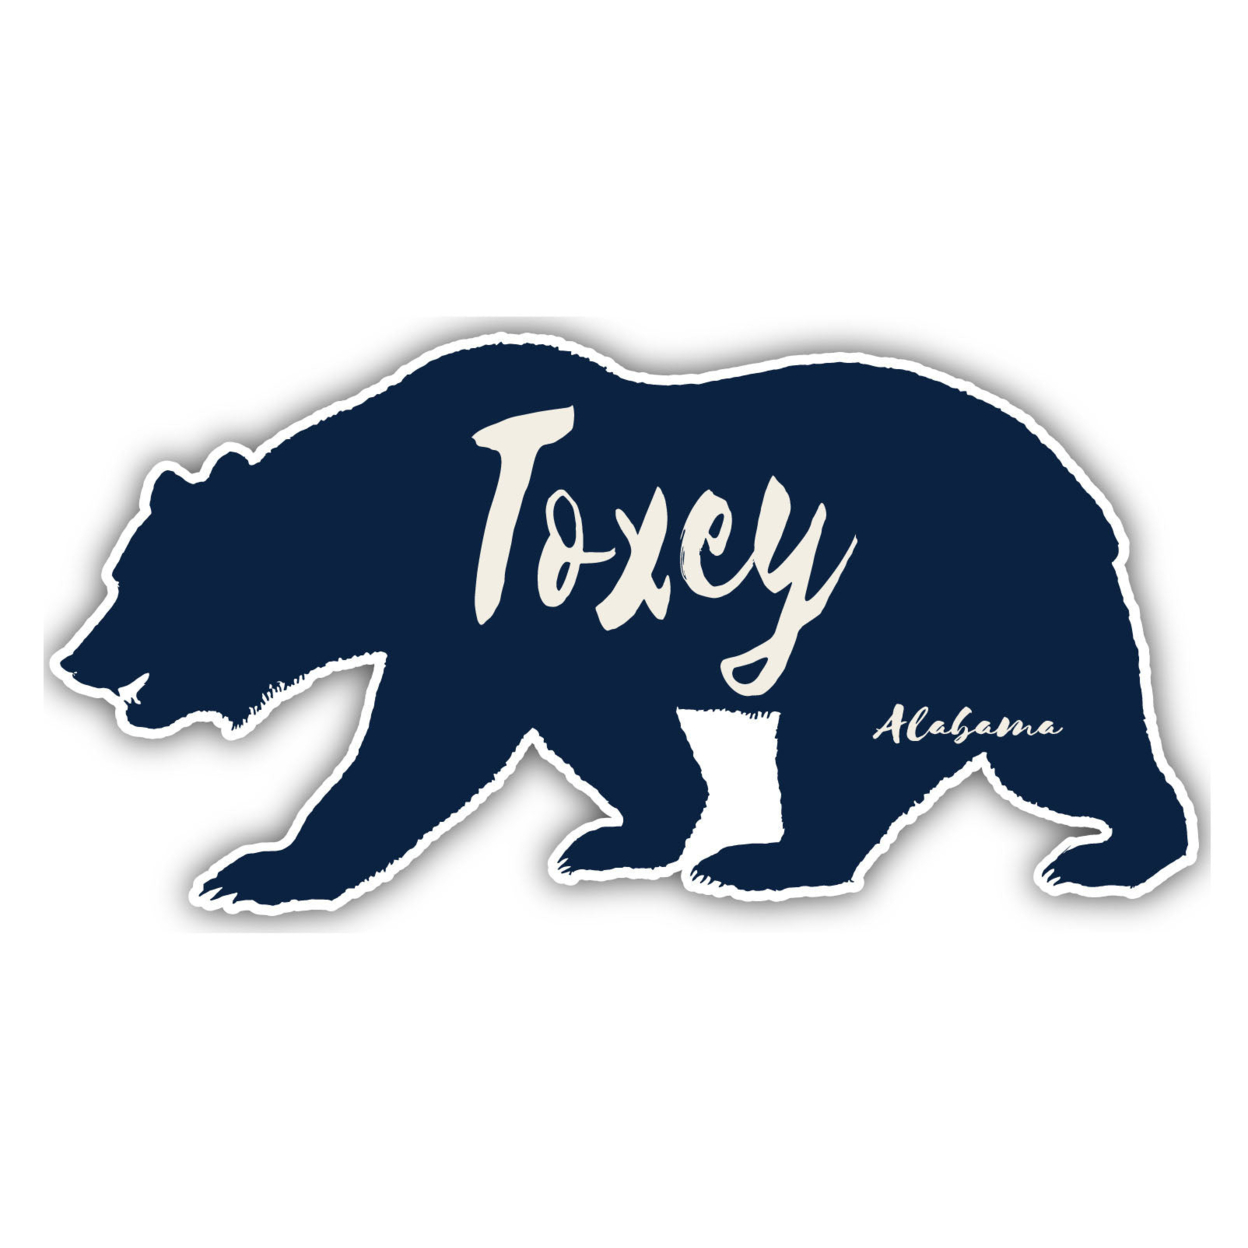 Toxey Alabama Souvenir Decorative Stickers (Choose Theme And Size) - Single Unit, 4-Inch, Bear